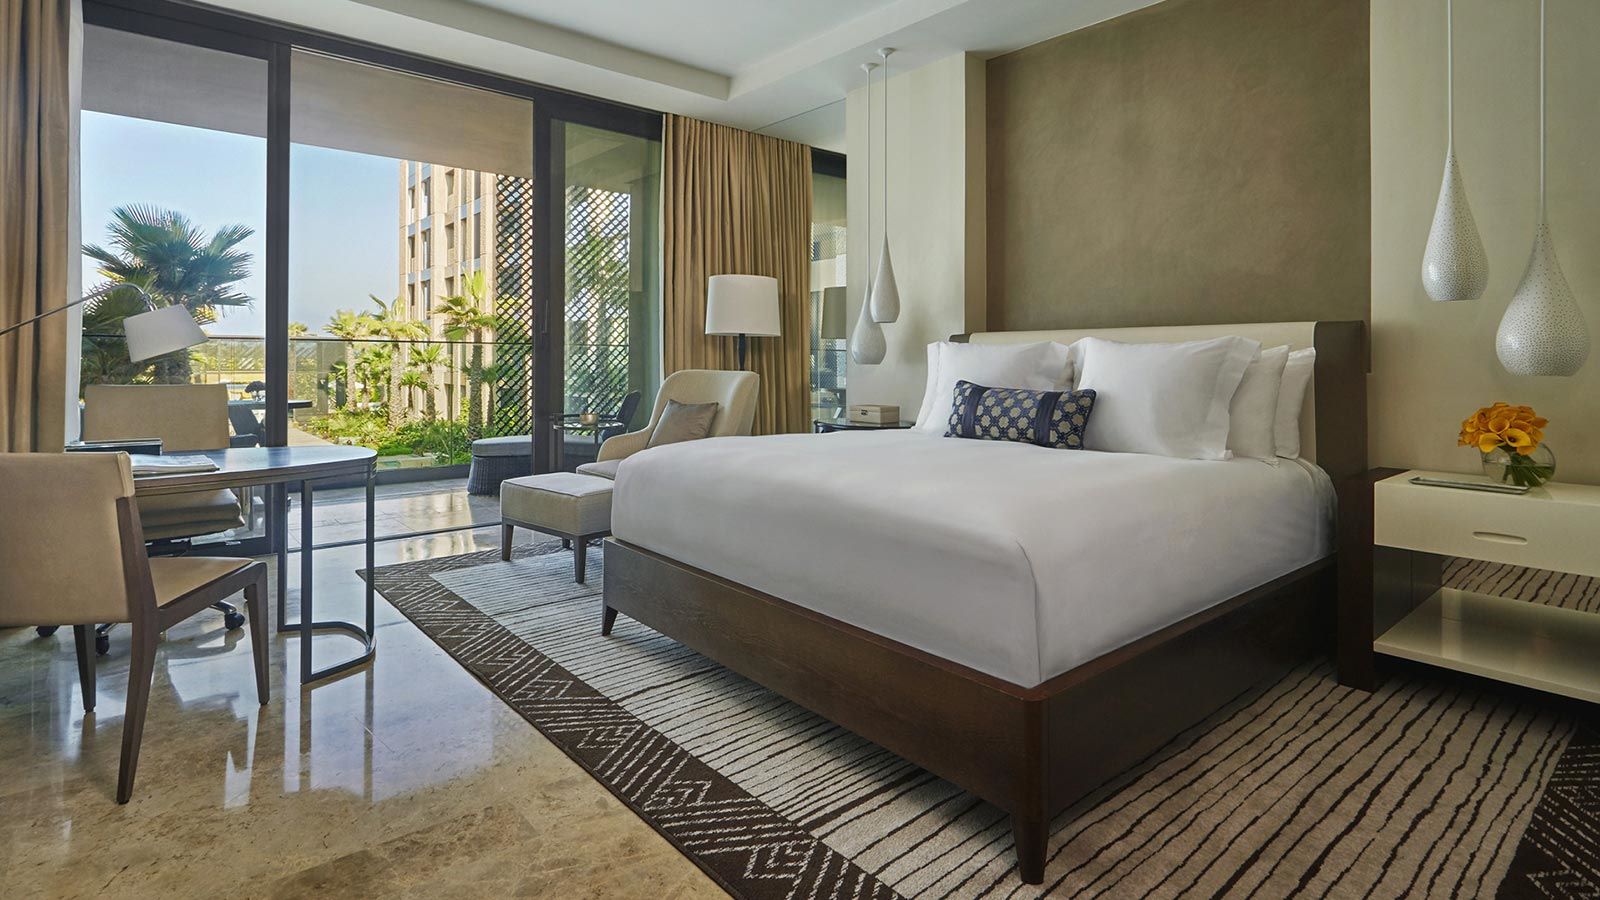 Casablanca Four Seasons Hotel, Modern Bedroom - Mace Group